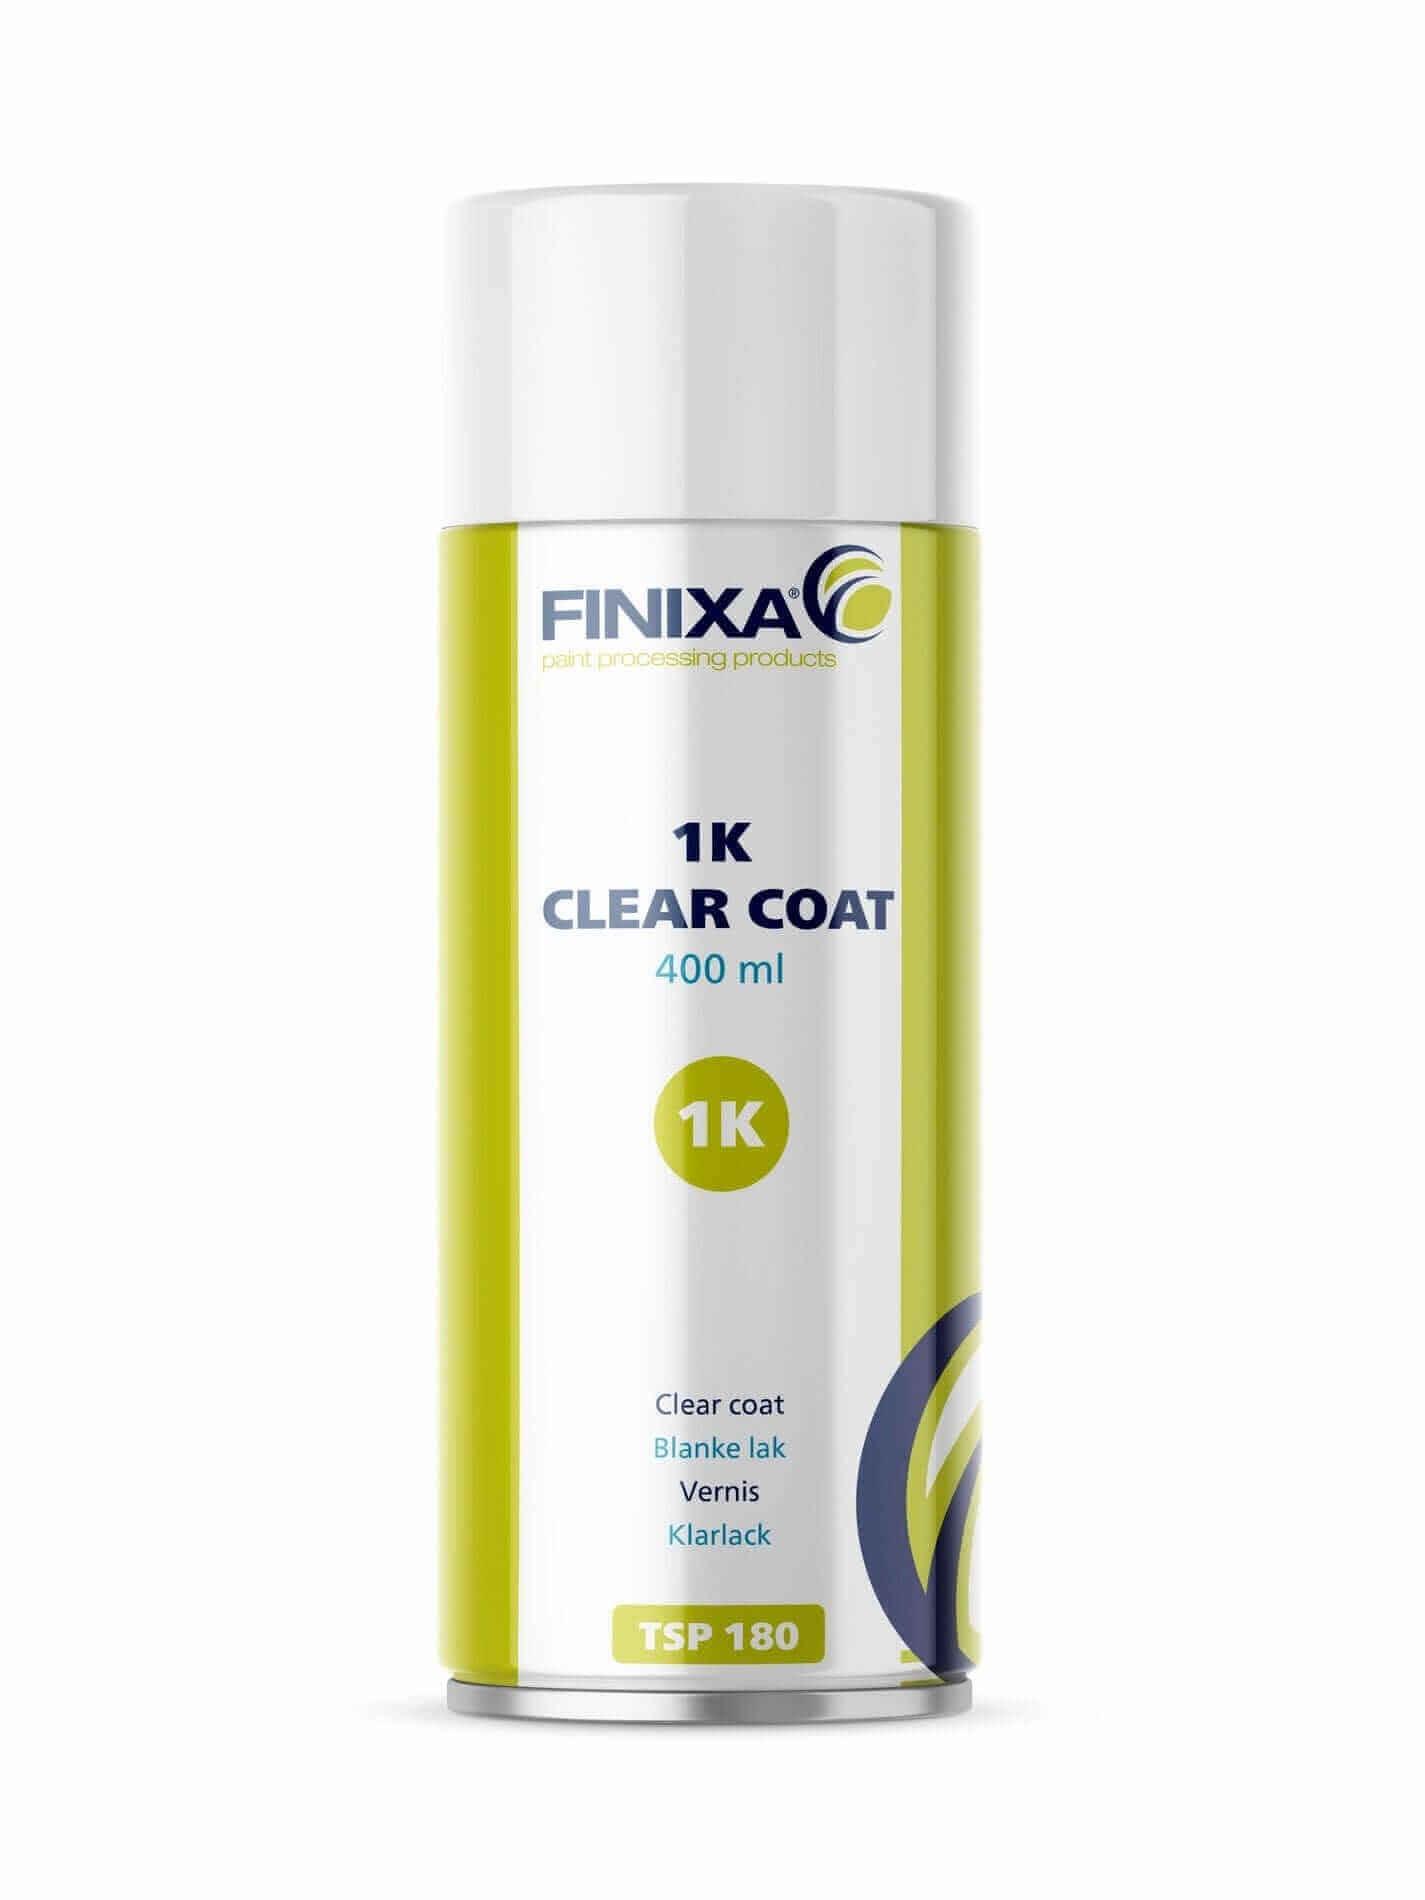 Finixa | Finixa 1K Clear Coat 400mls at R 228.00